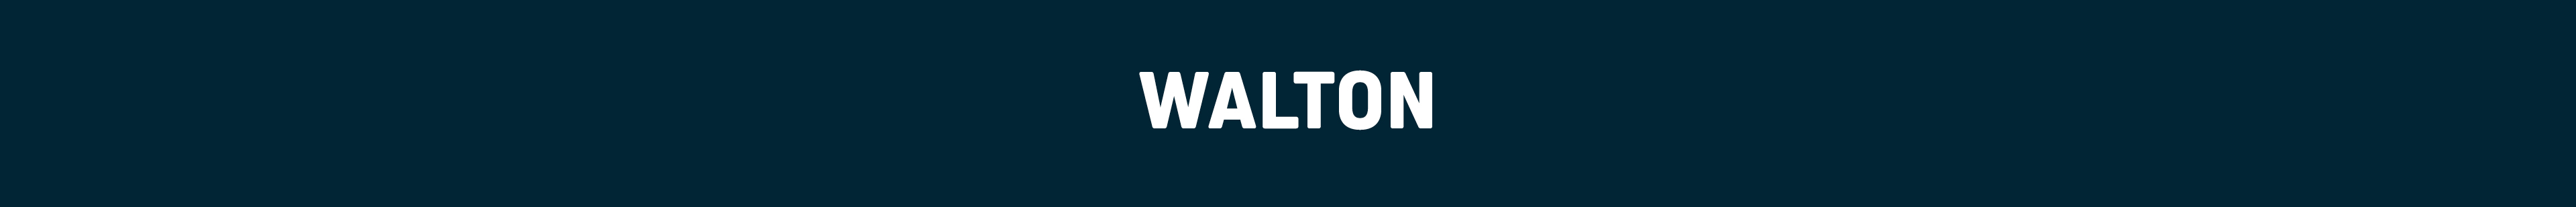 Walton.jpg